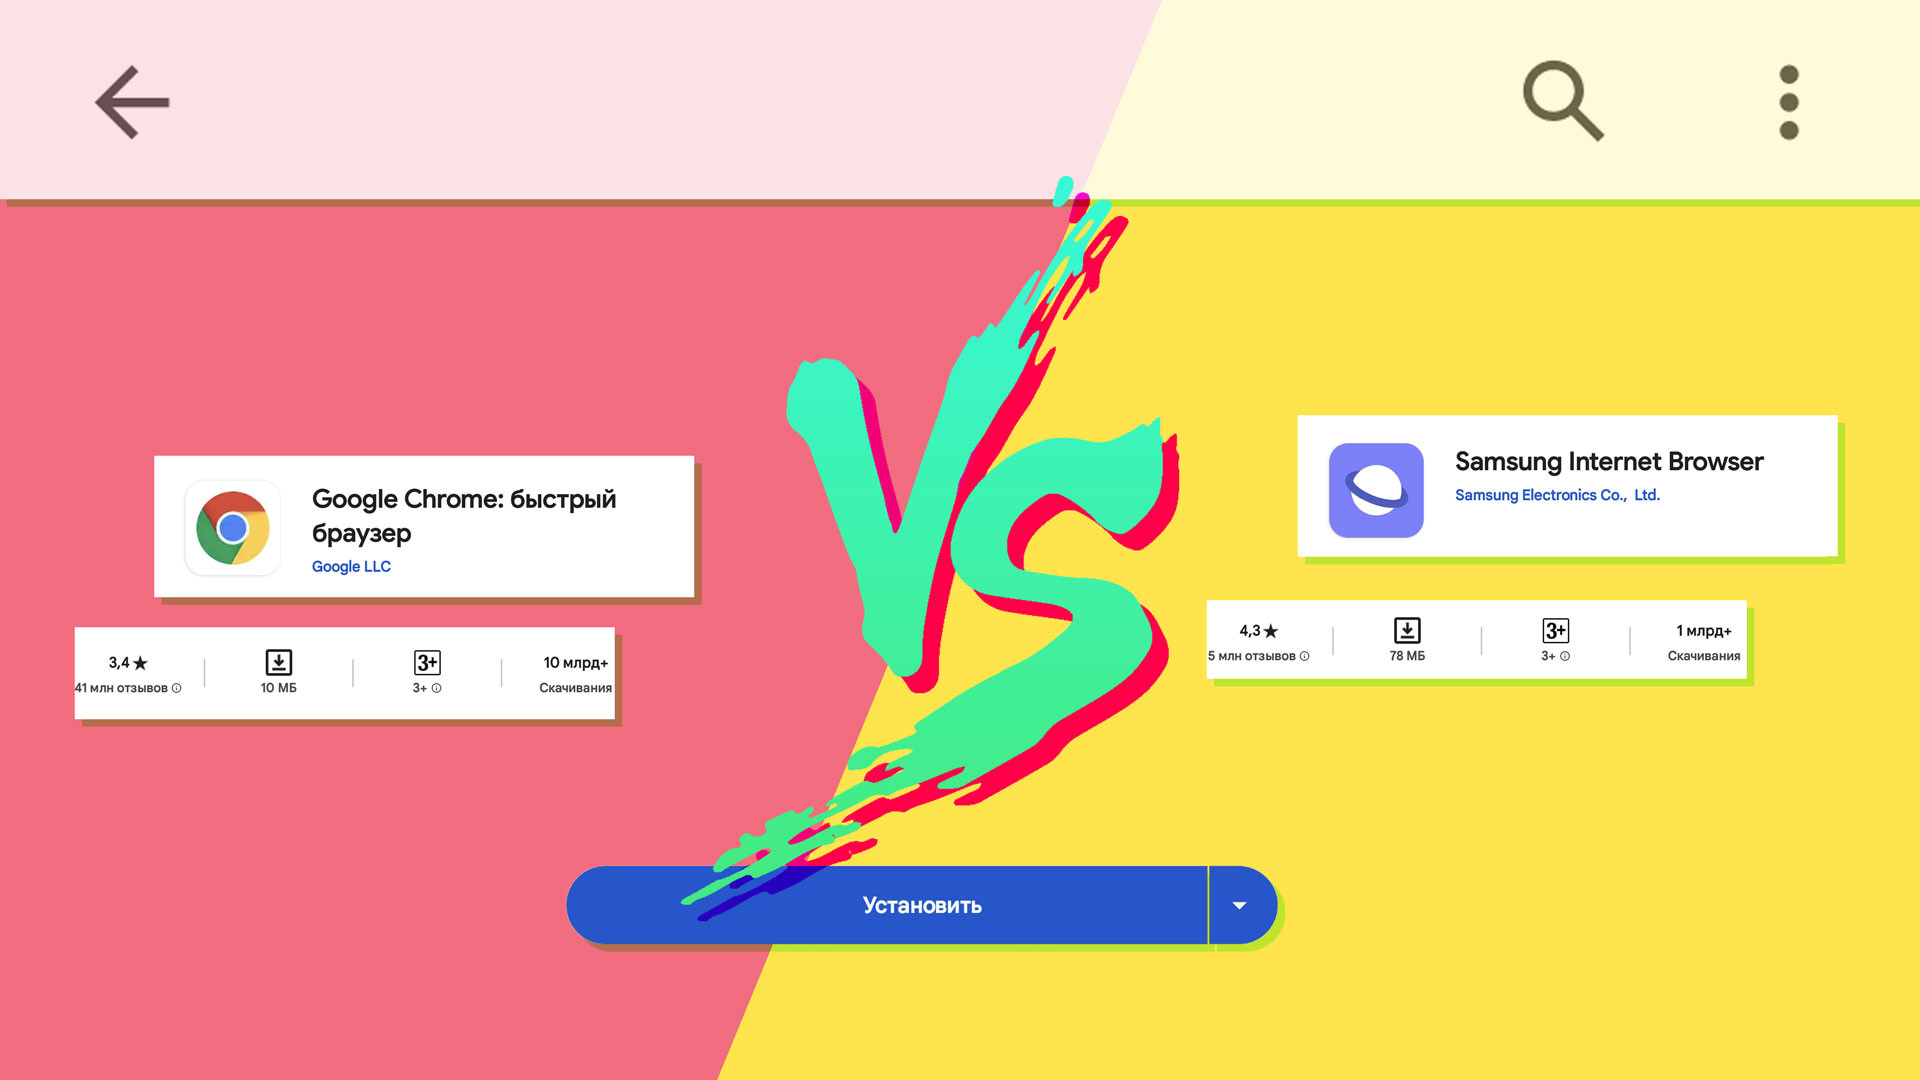 Google Chrome или Samsung Internet: какой браузер для Android лучше?